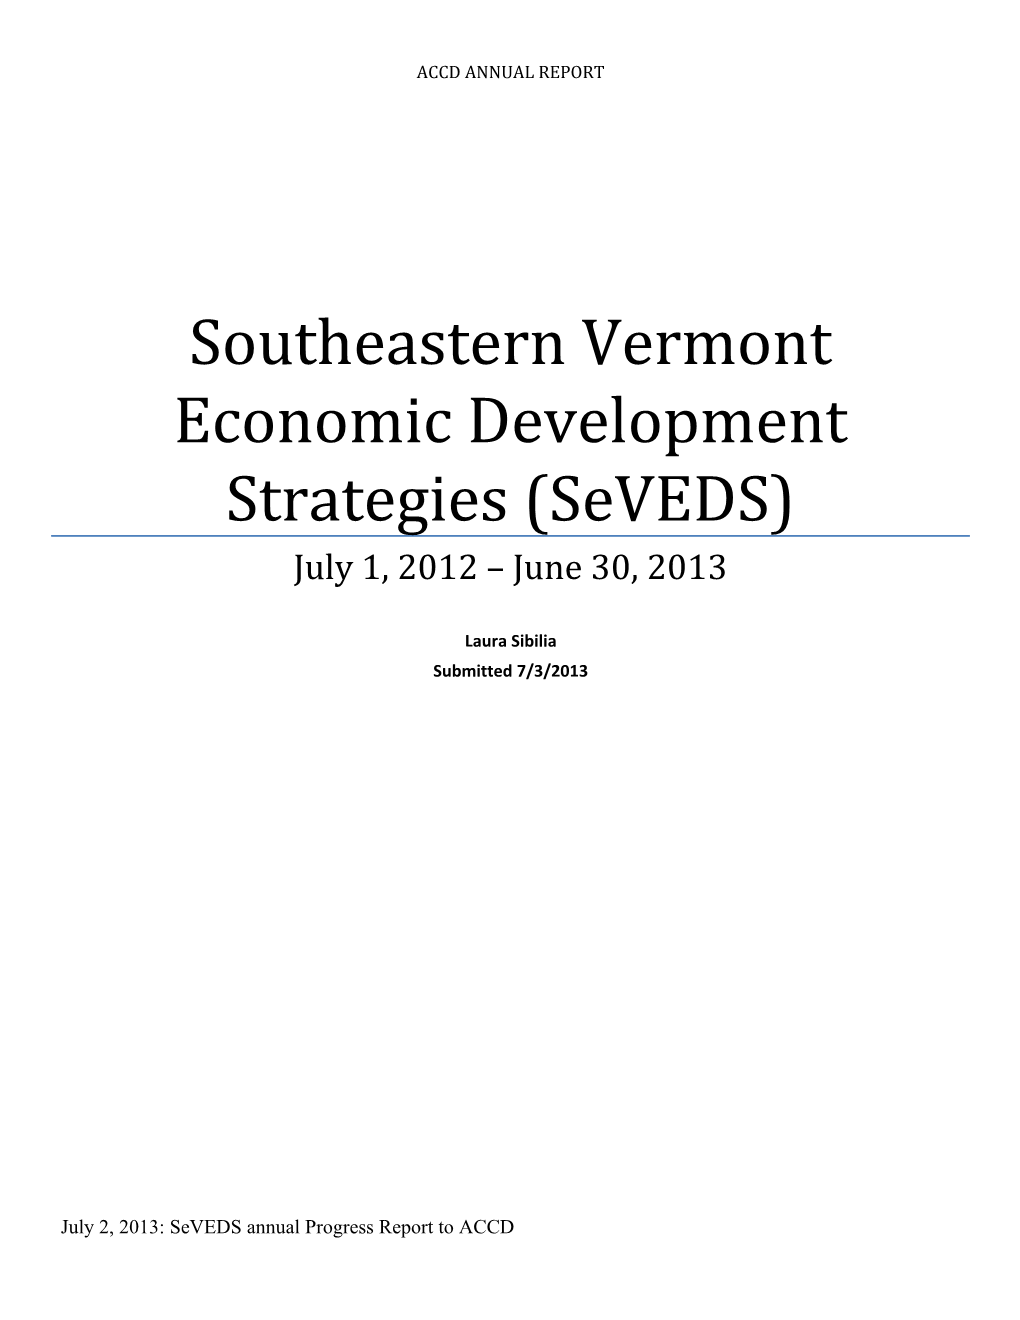 Southeastern Vermont Economic Development Strategies (Seveds)